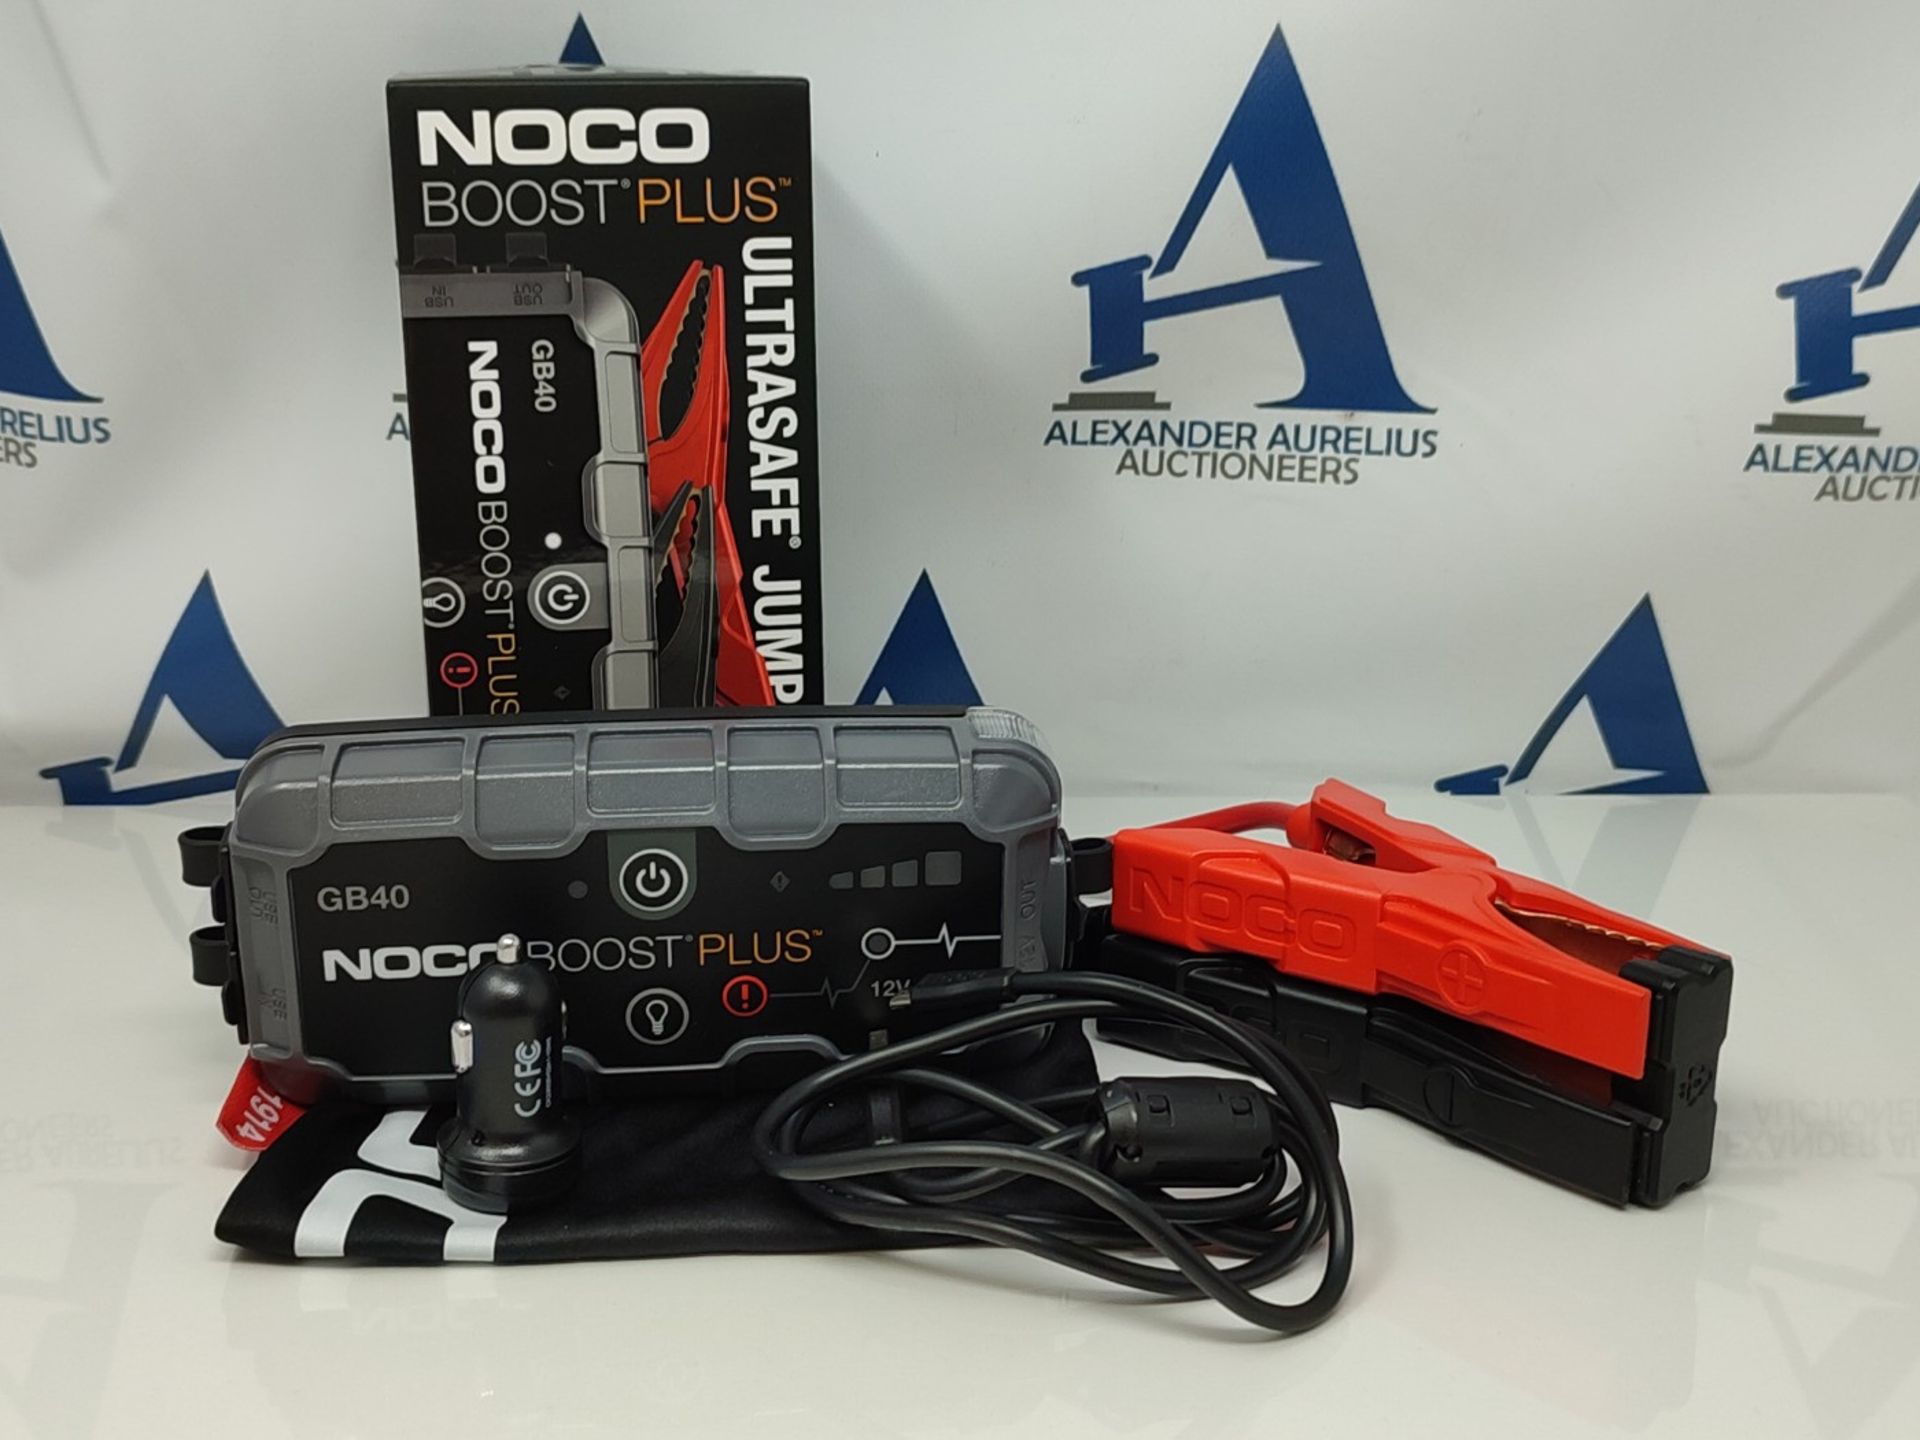 RRP £109.00 NOCO Boost Plus GB40 1000A UltraSafe Car Jump Starter, Jump Starter Power Pack, 12V Ba - Image 3 of 3